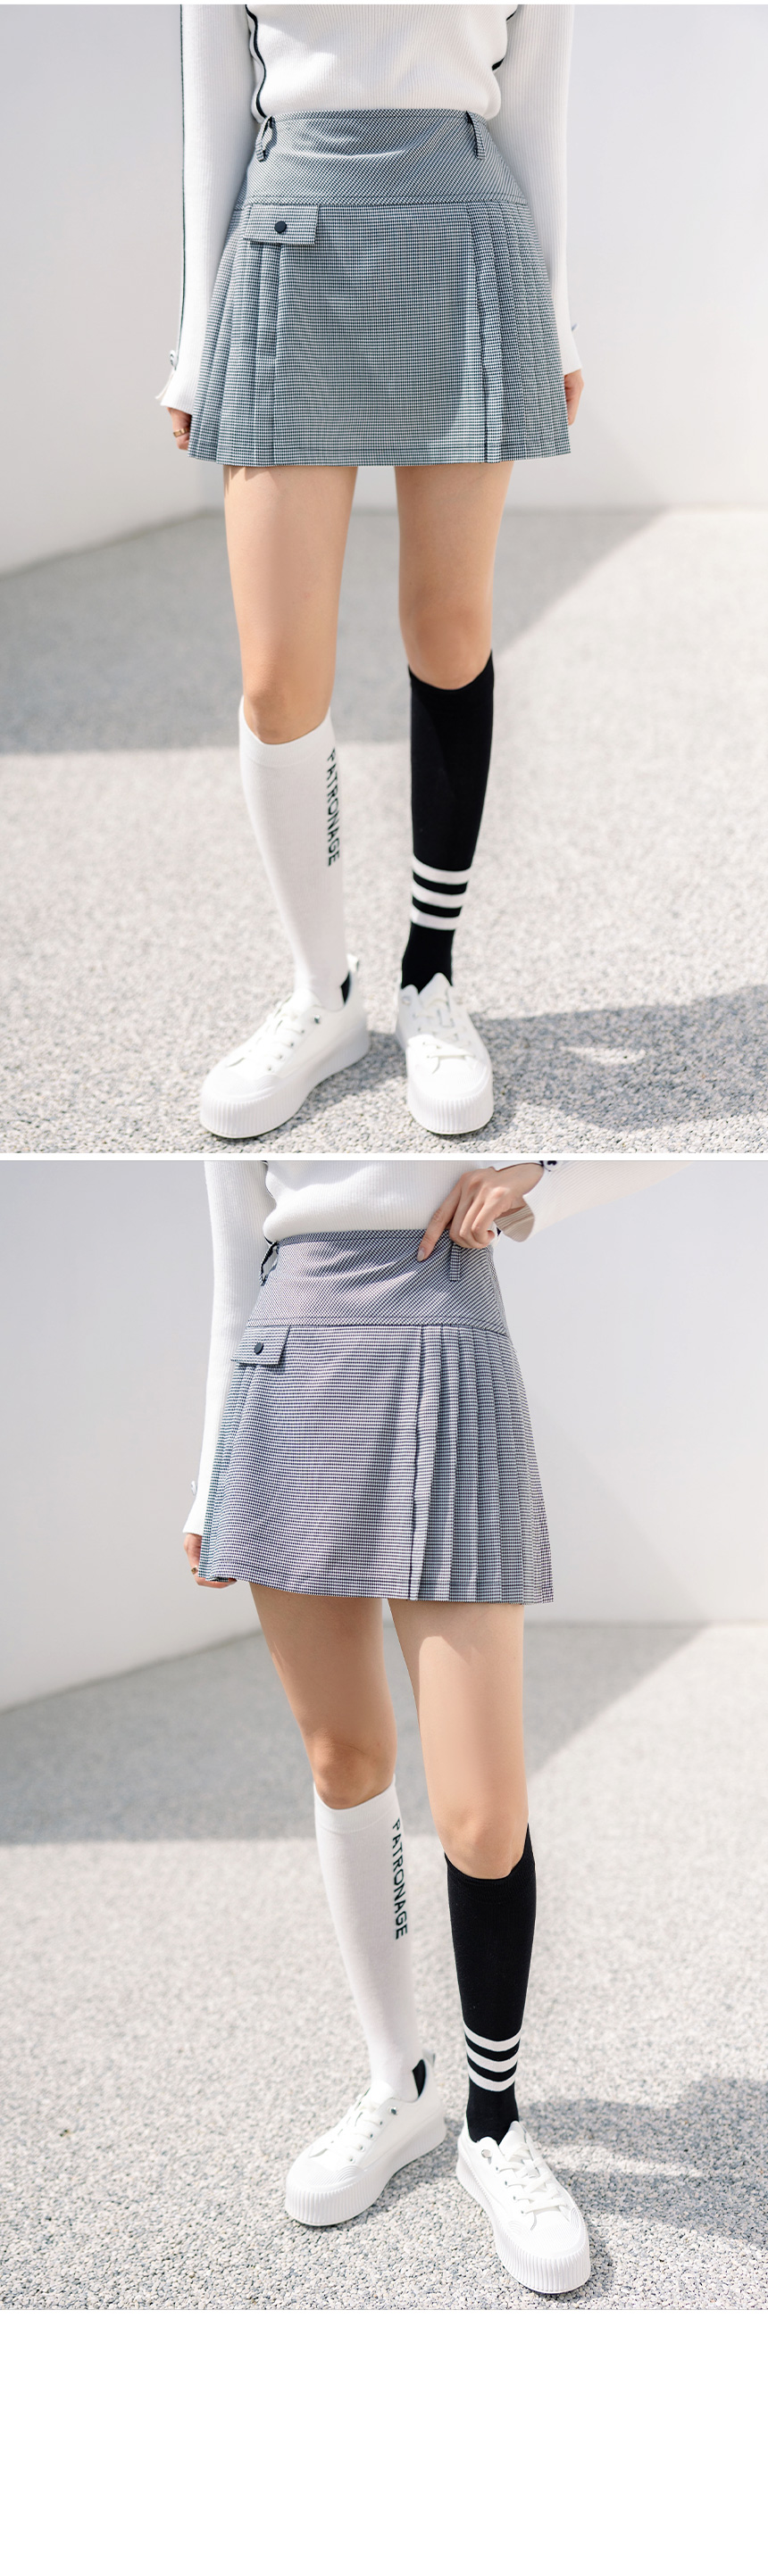 QoG】[ゴルフウェア] サイドポケットプリーツスカート(インナーパンツ 